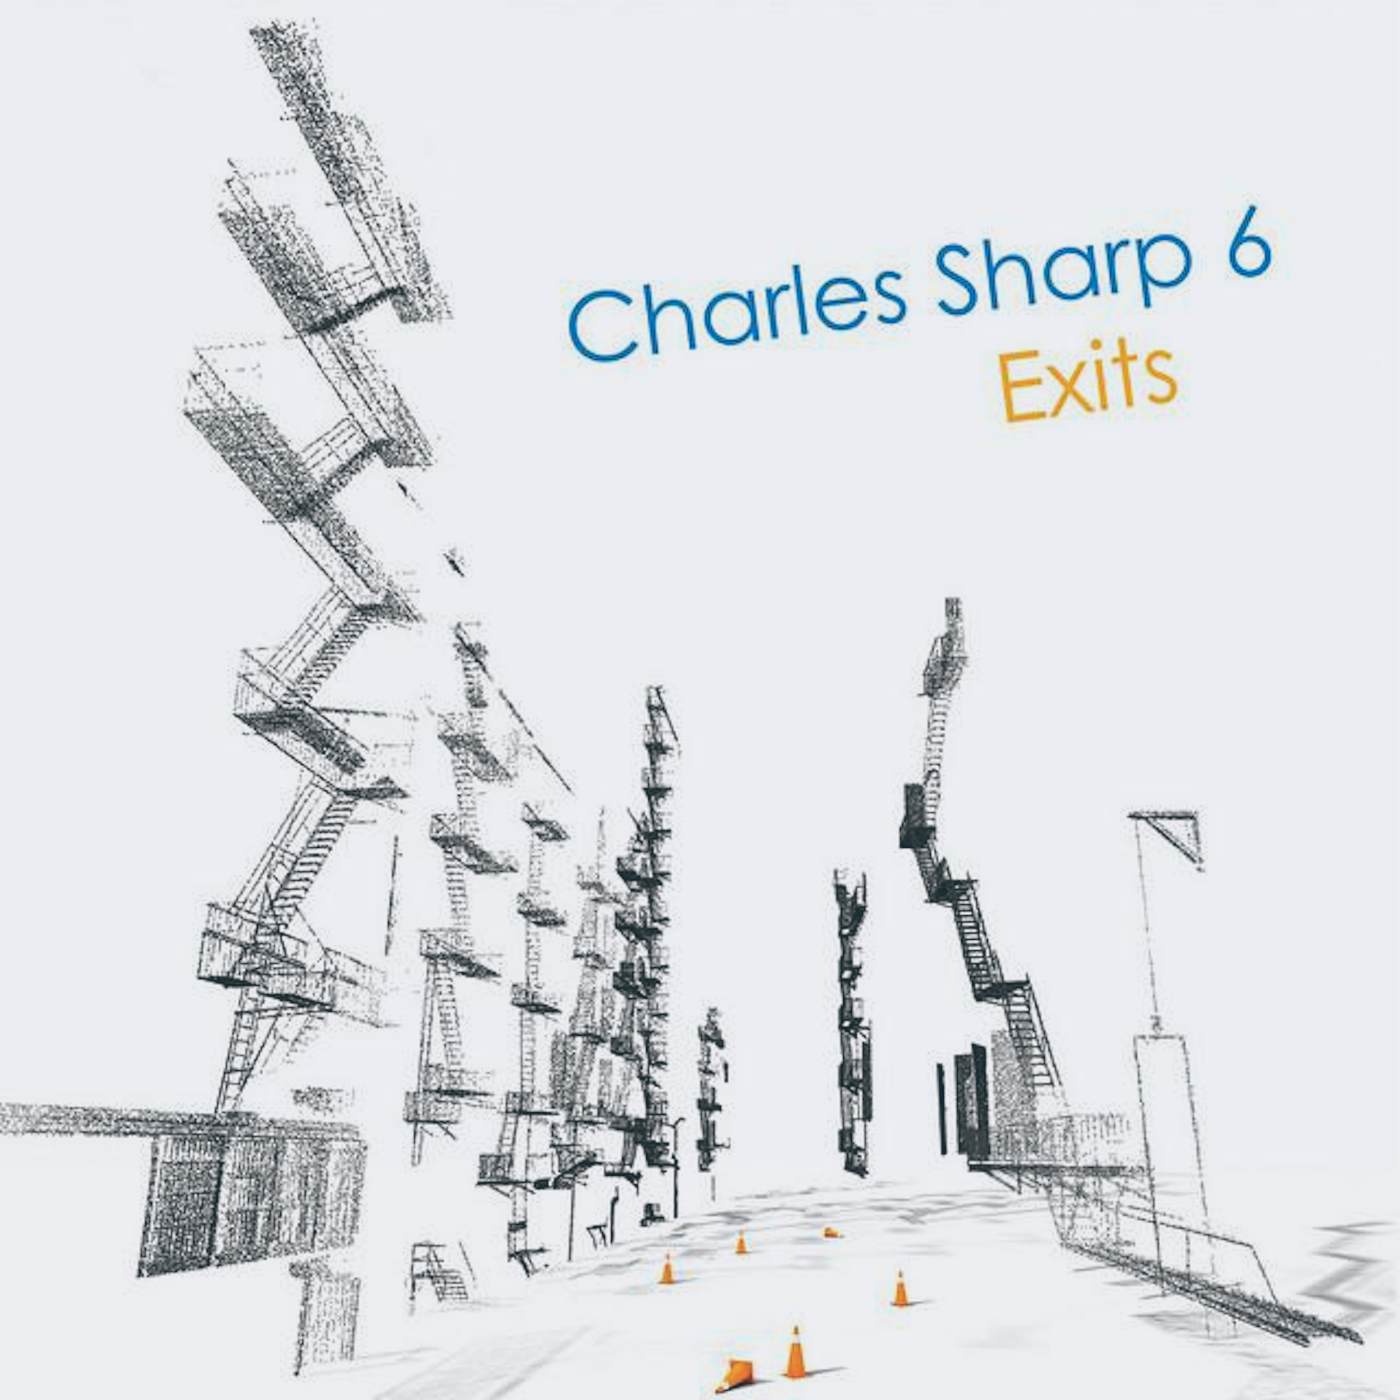 Charles Sharp 6